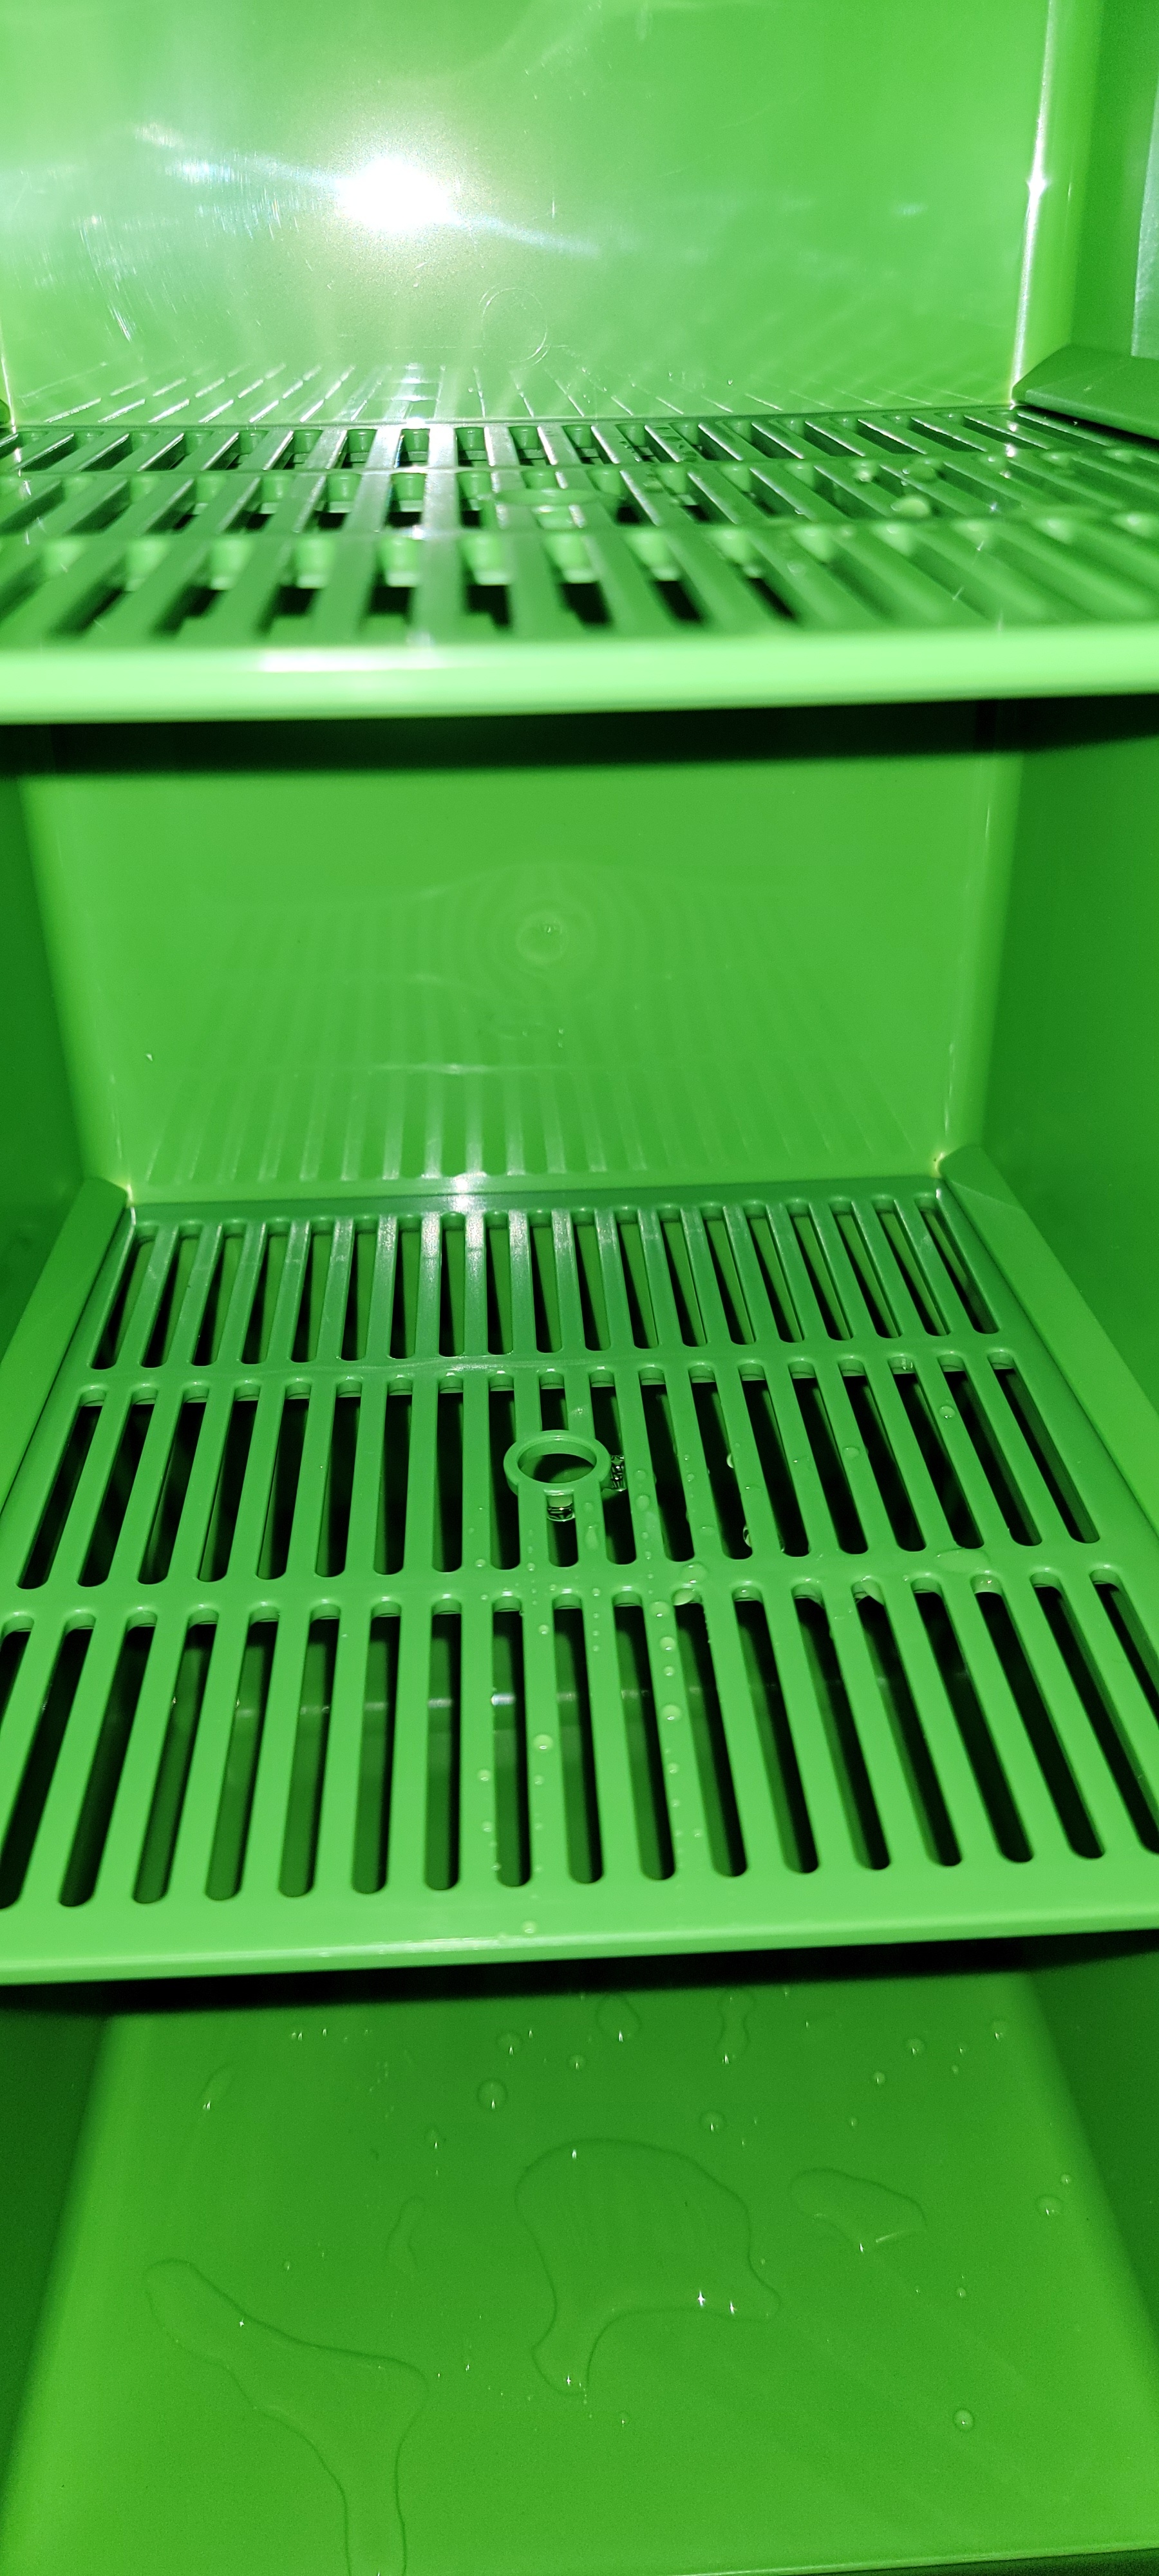 Xbox Series X Replica Mini Fridge - Target Exclusive UKONIC - OPEN BOX!